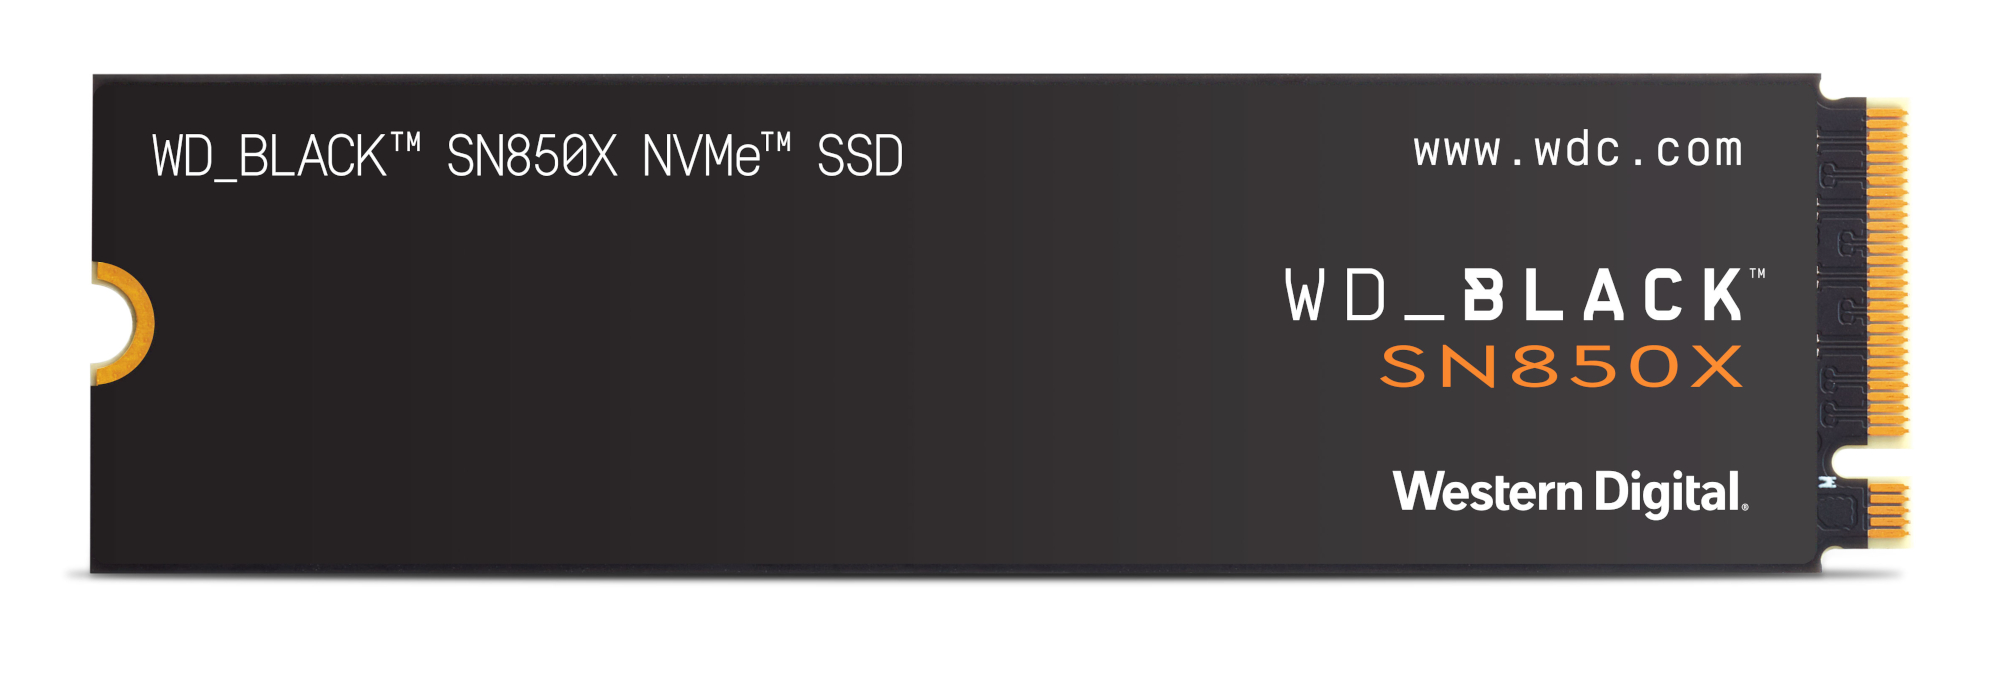 WD Black SN850X - Best PCIe 4.0 SSD runner-up